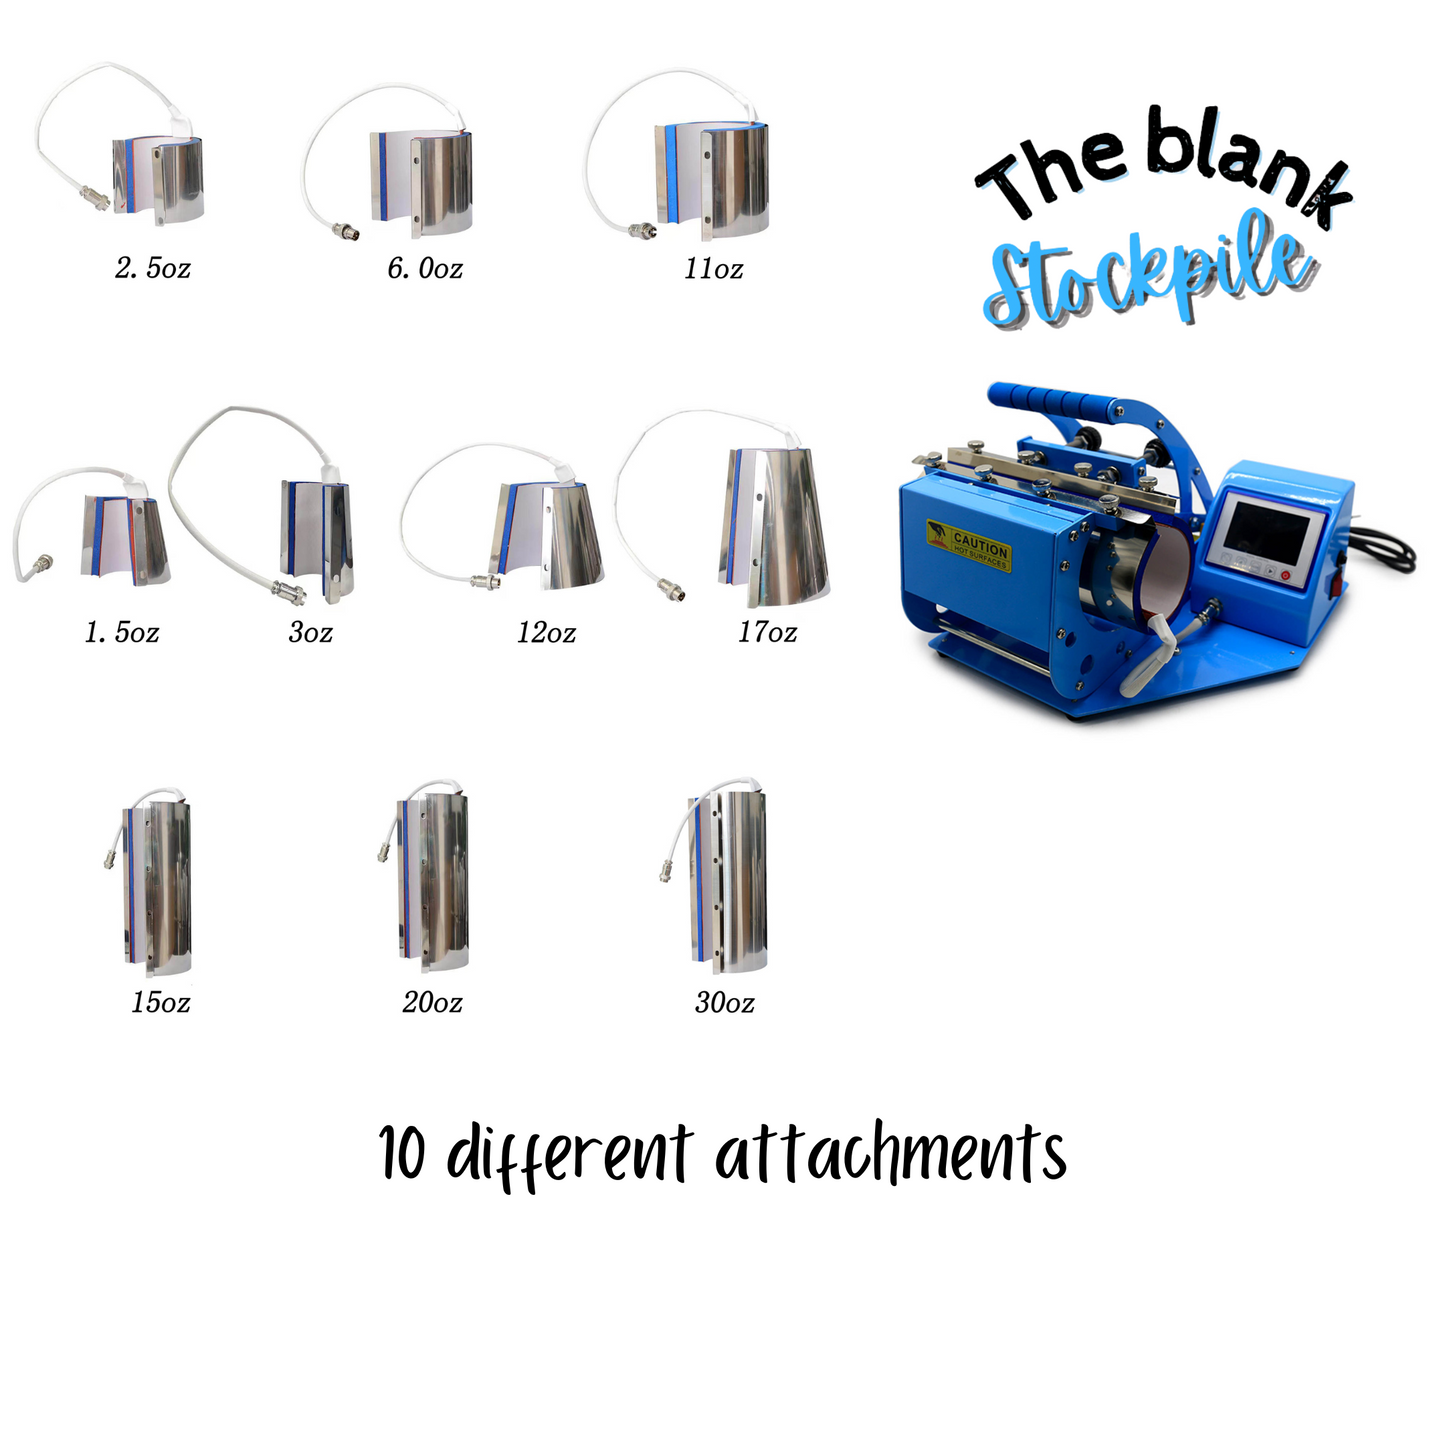 Additional ATTACHMENTS for Stockpile Elite Tumbler Heat Press, tumbler –  The Blank Stockpile